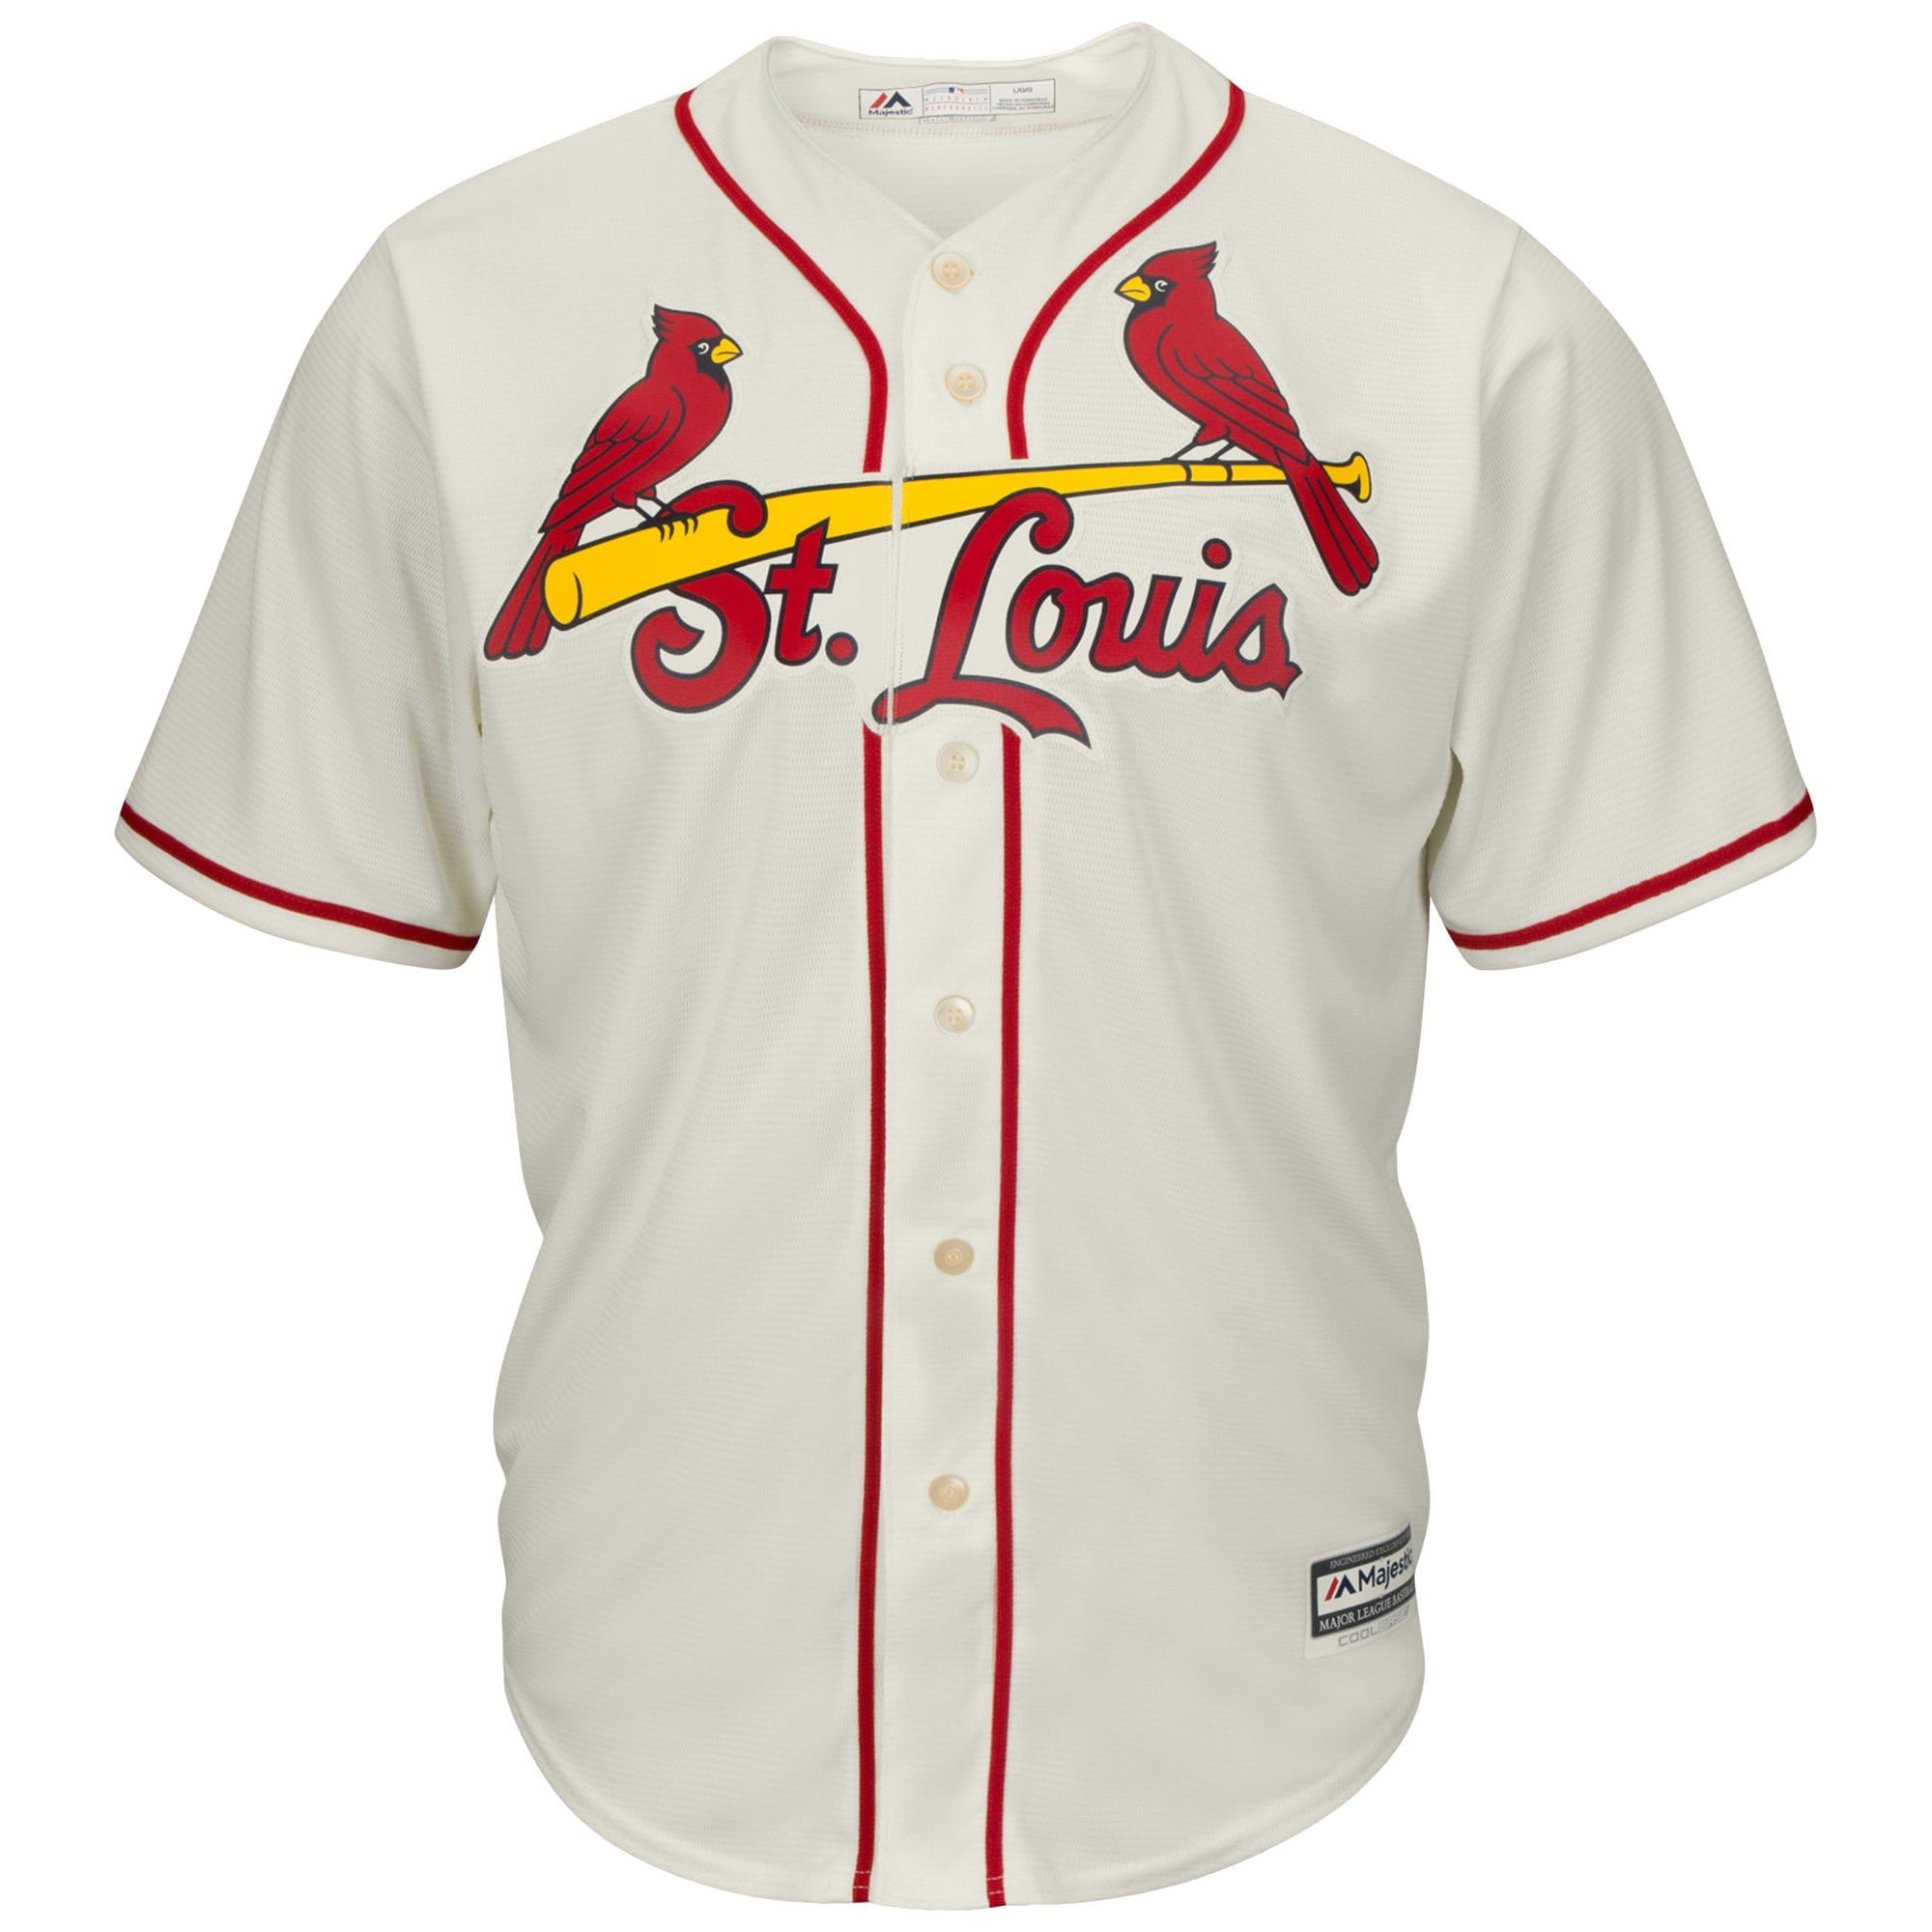 cardinals cream jersey